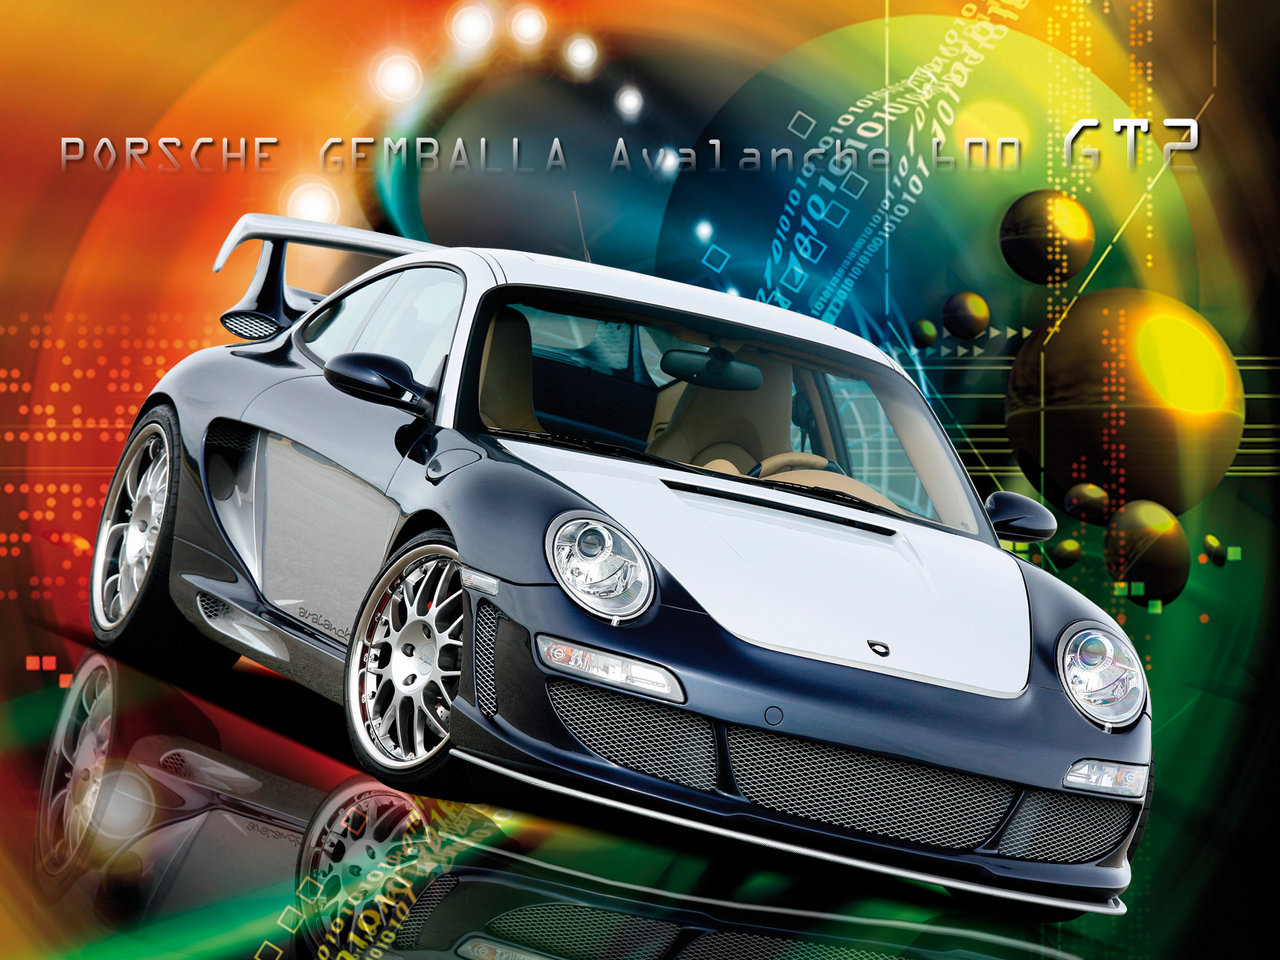 Tapety samochody - Porsche Gemballa Avalanche 600 GT2.jpg